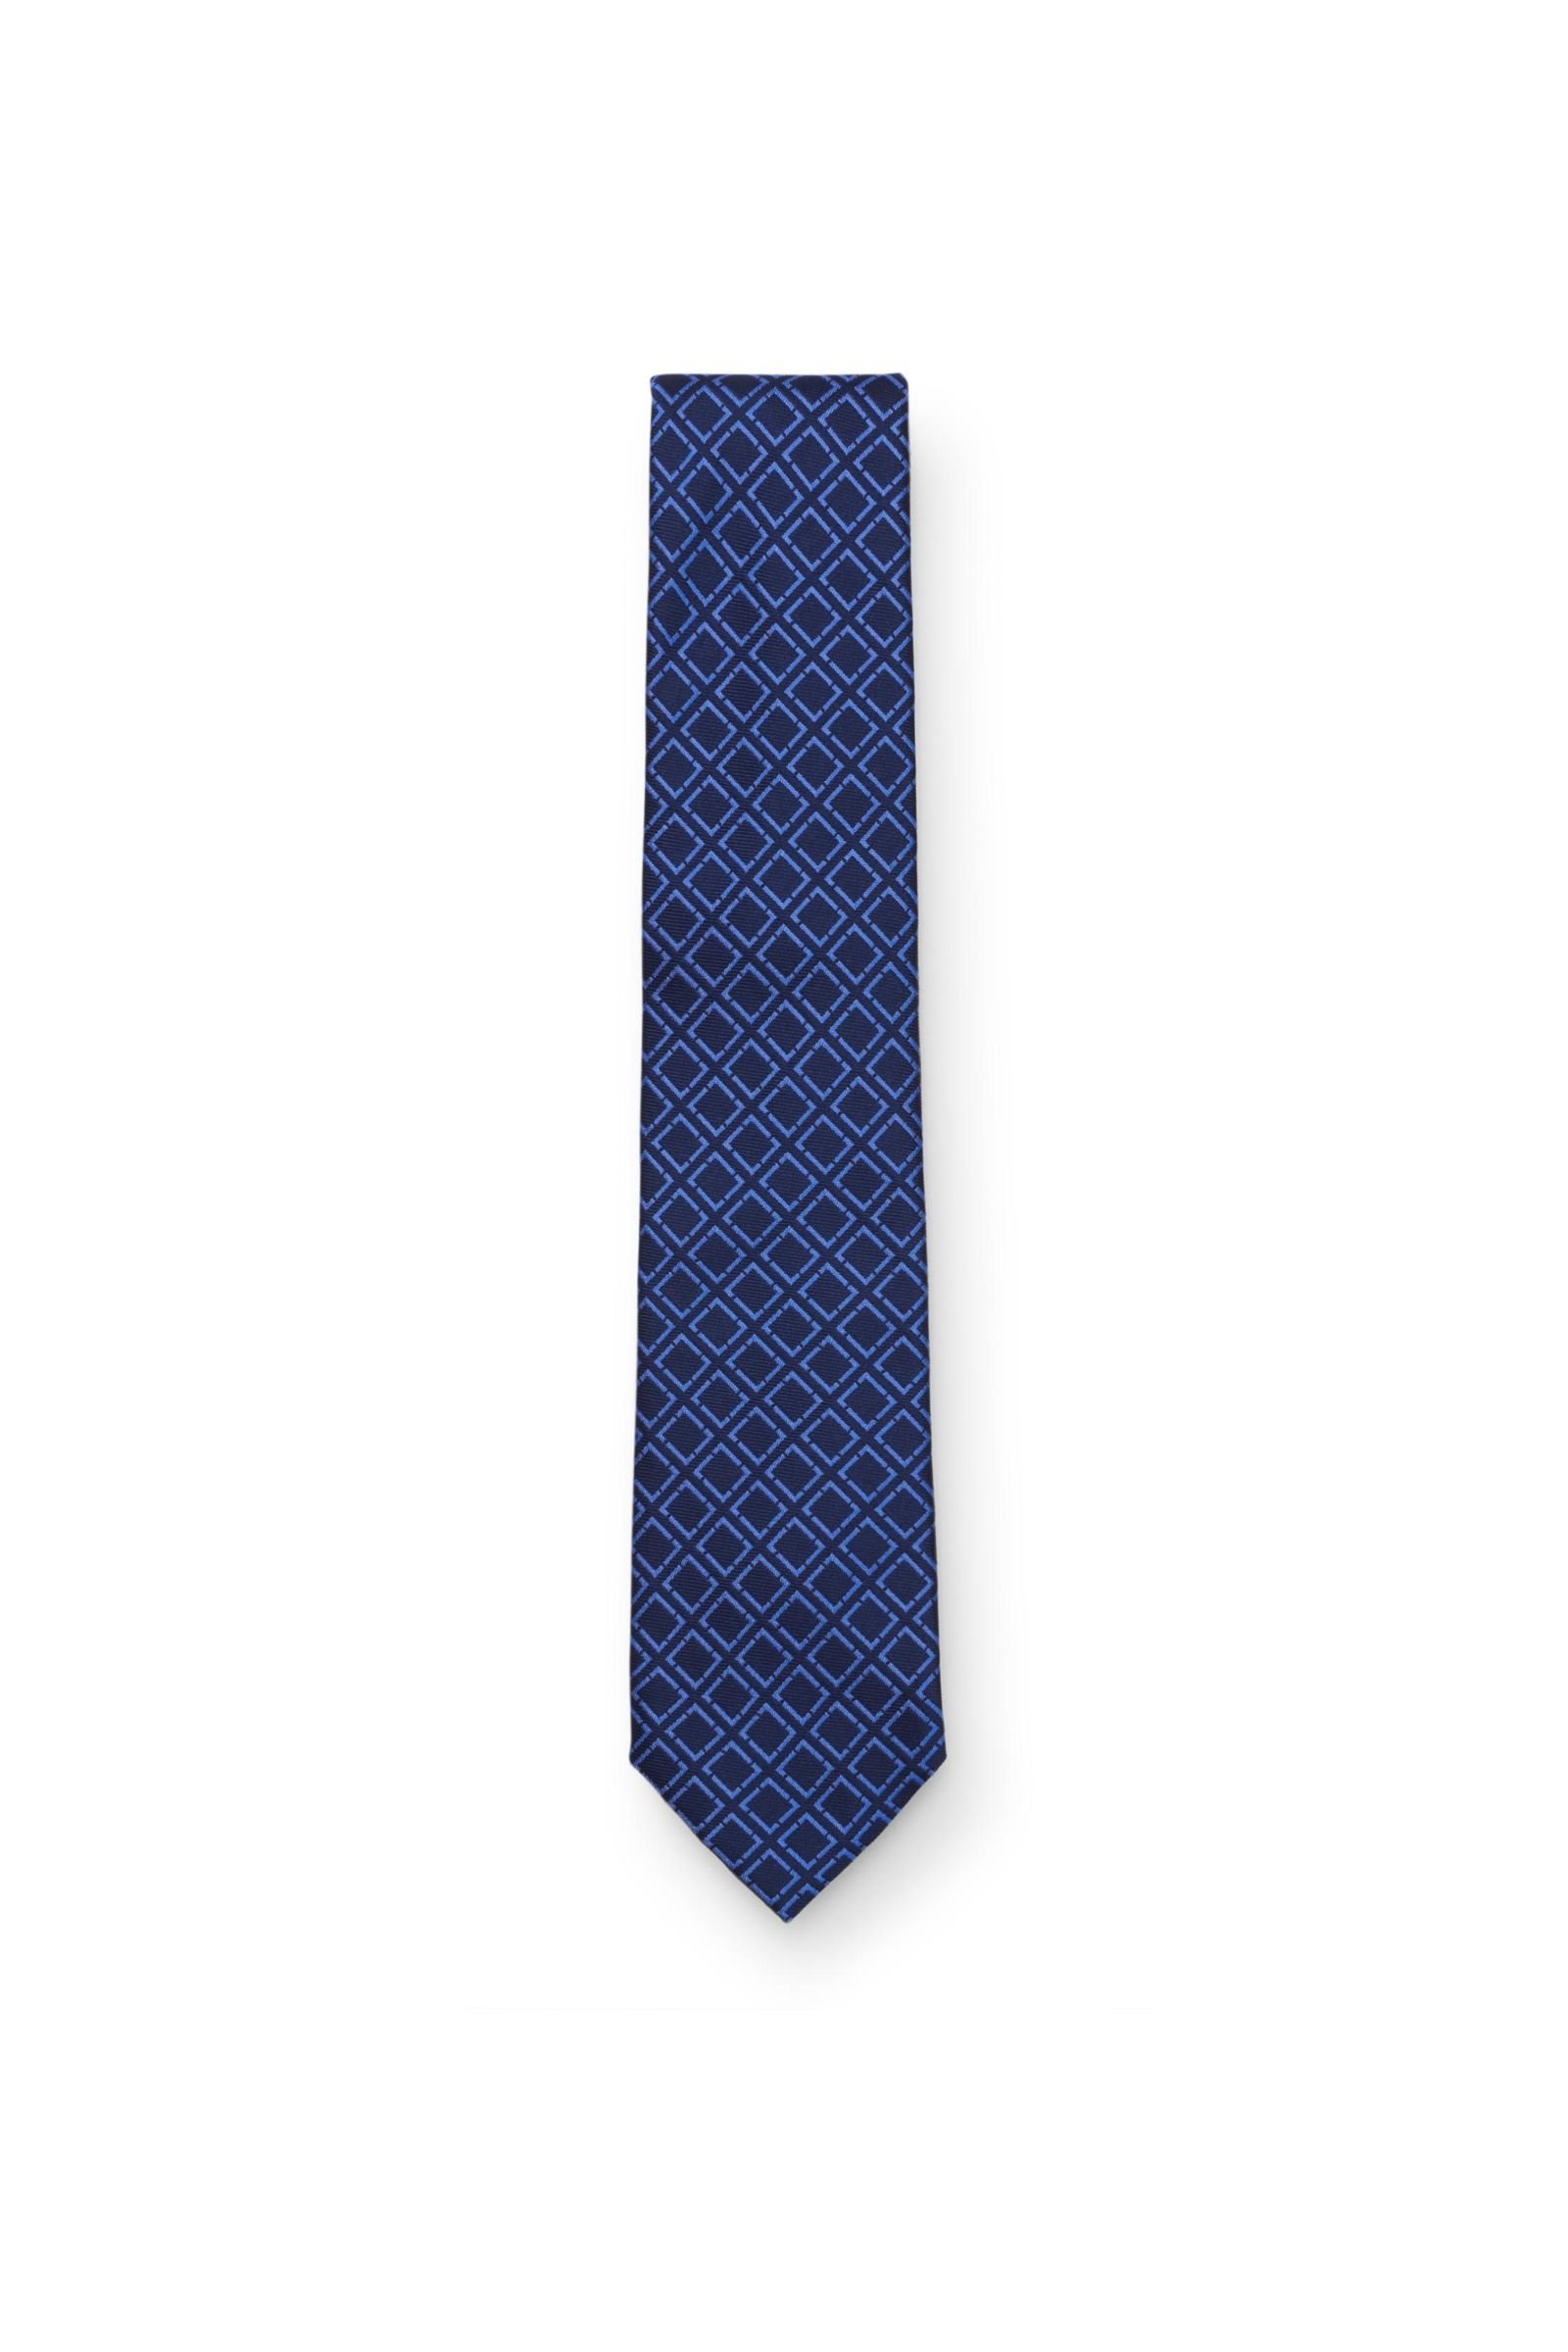 Silk tie blue/navy patterned